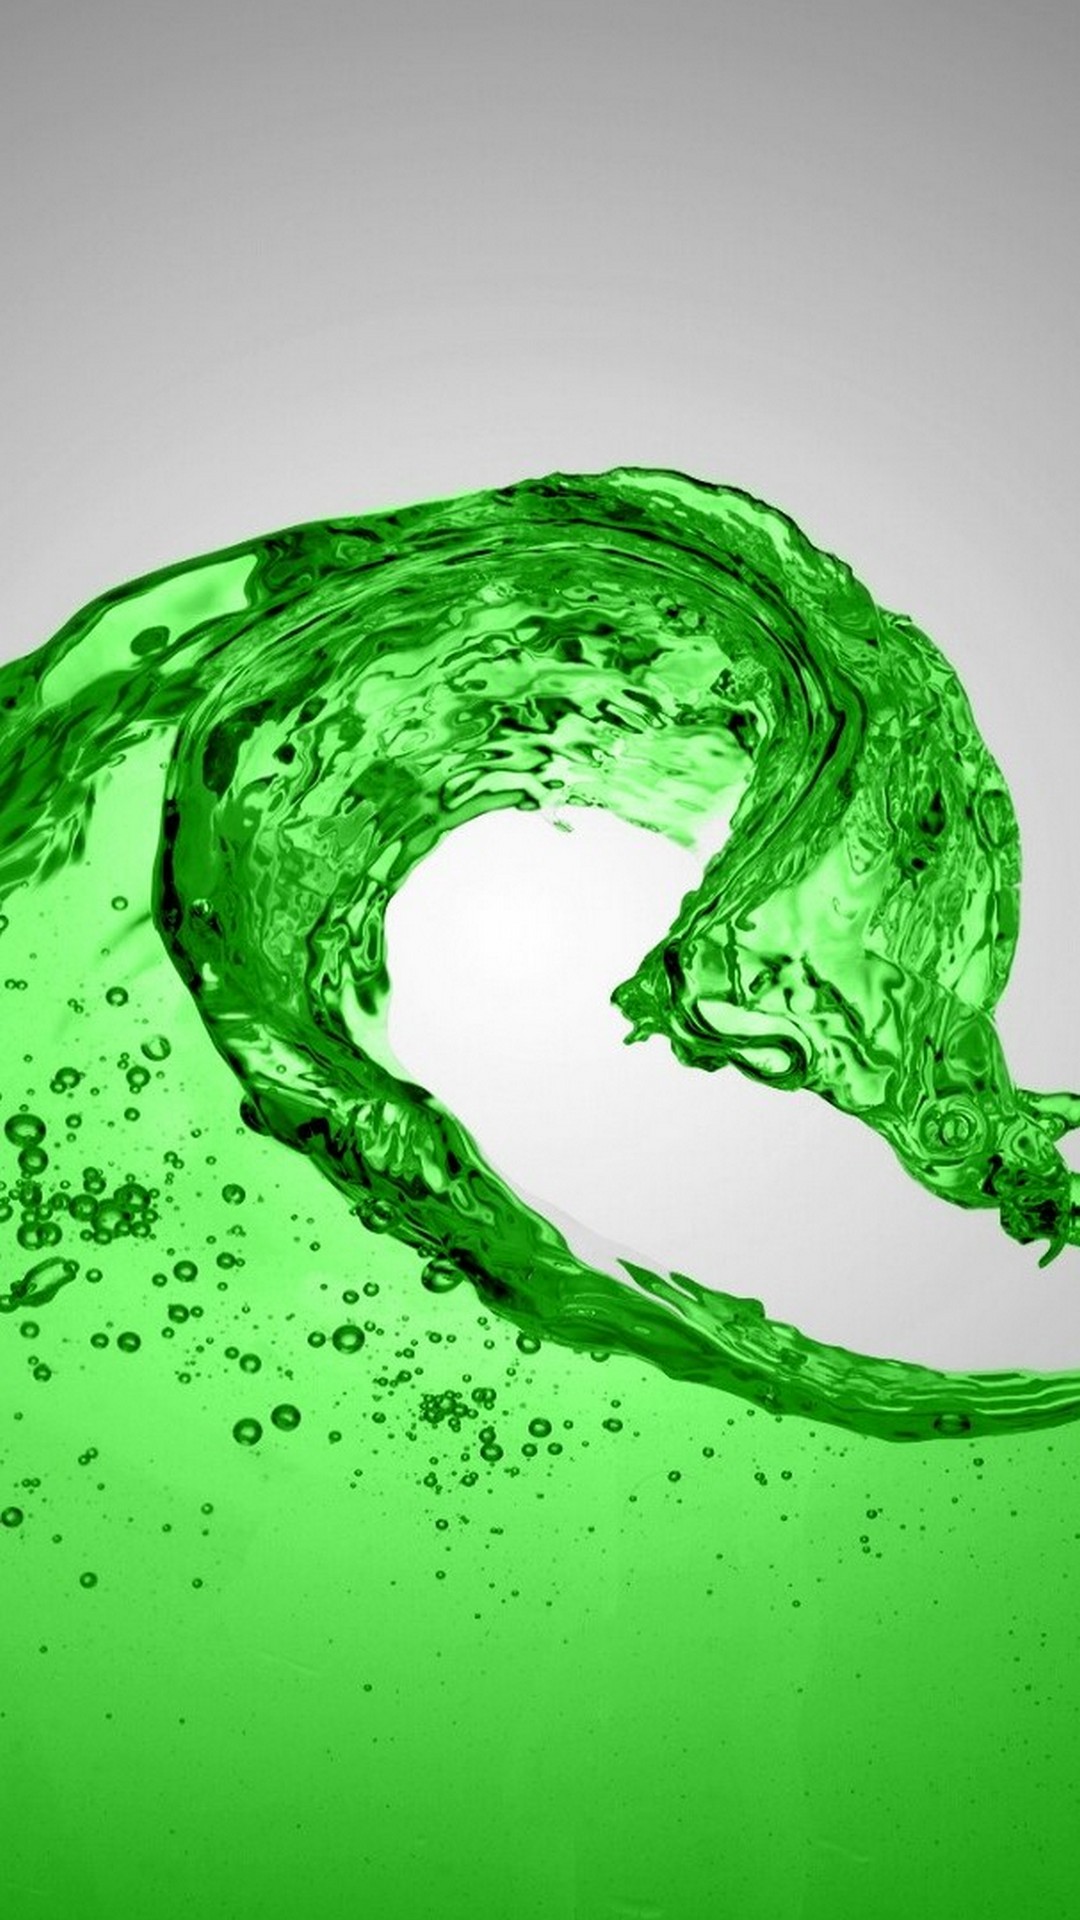 Green Liquid iPhone 8 Wallpaper resolution 1080x1920